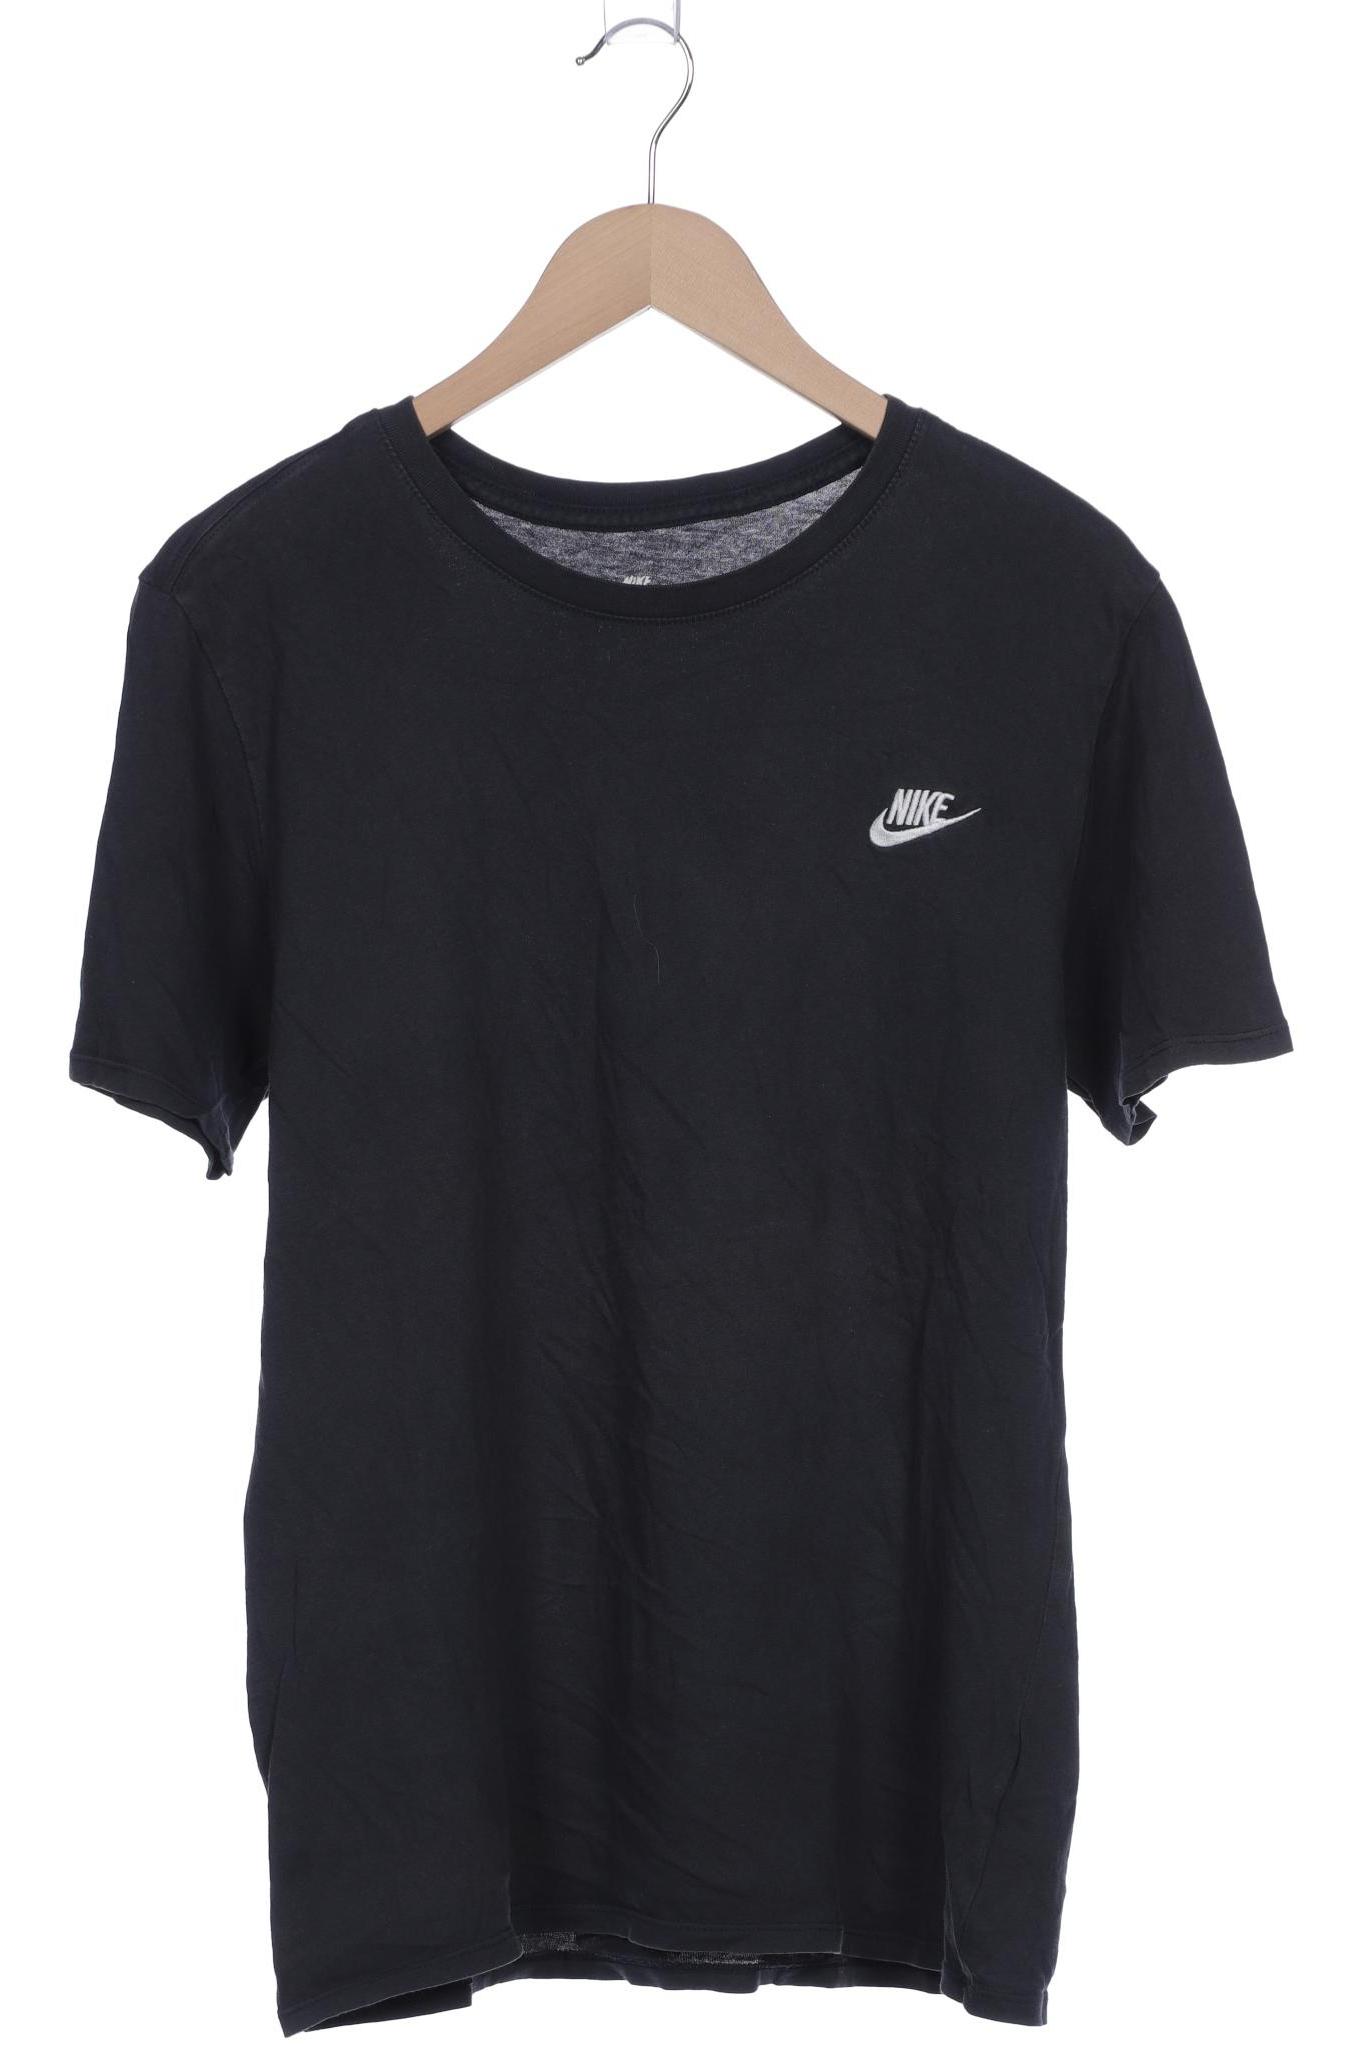 Nike Herren T-Shirt, marineblau, Gr. 48 von Nike